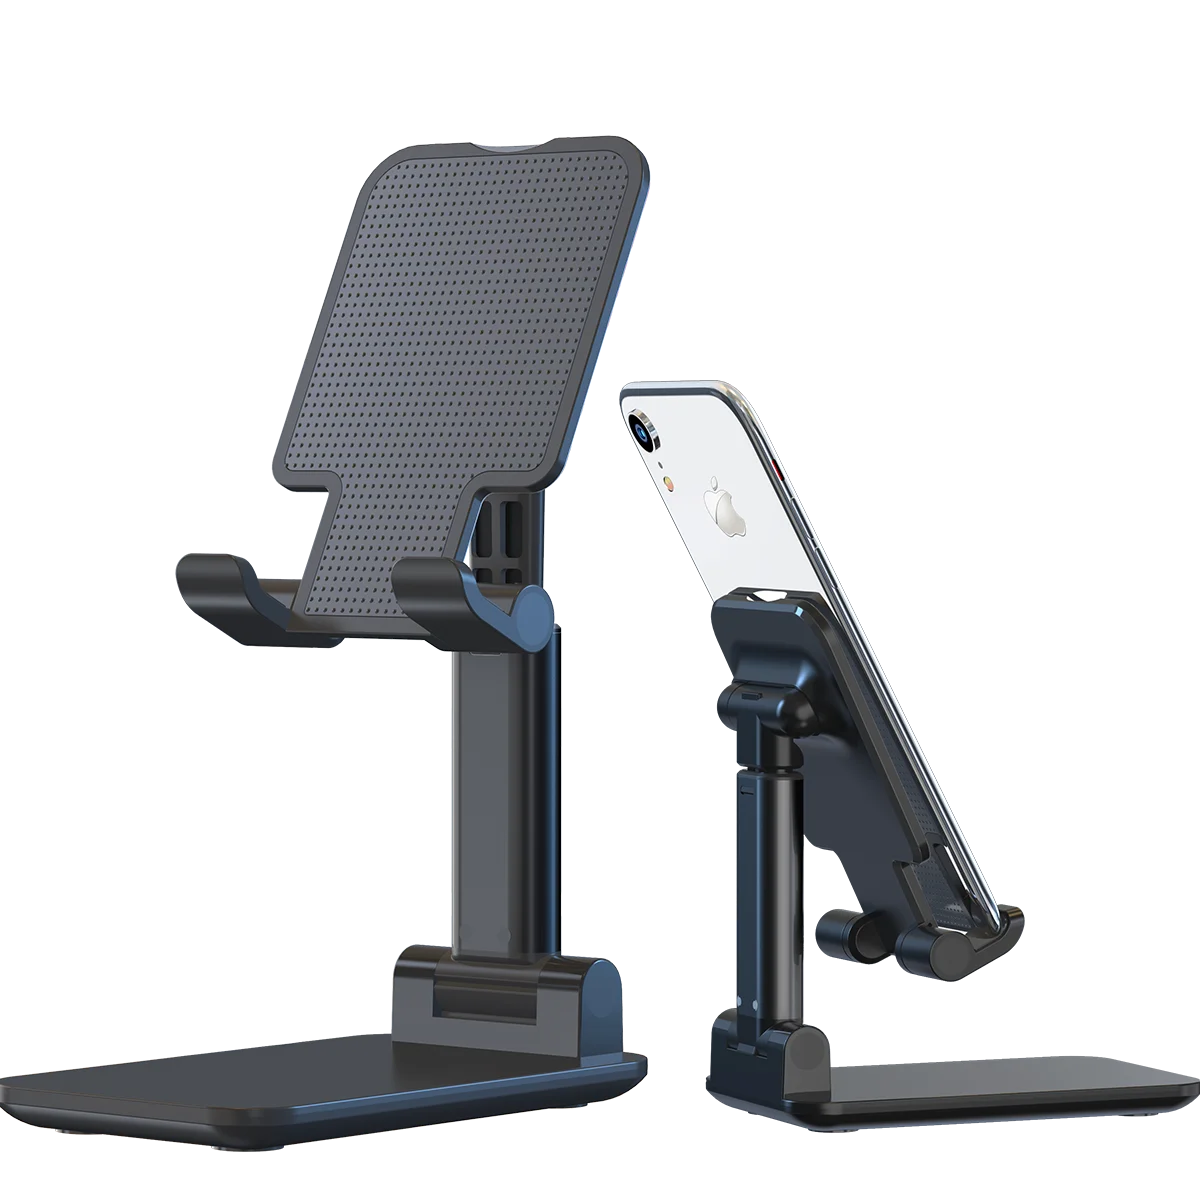 

LeYi cell rotating cellphone desktop folding portable foldable adjustable mobile smart phone holder stand